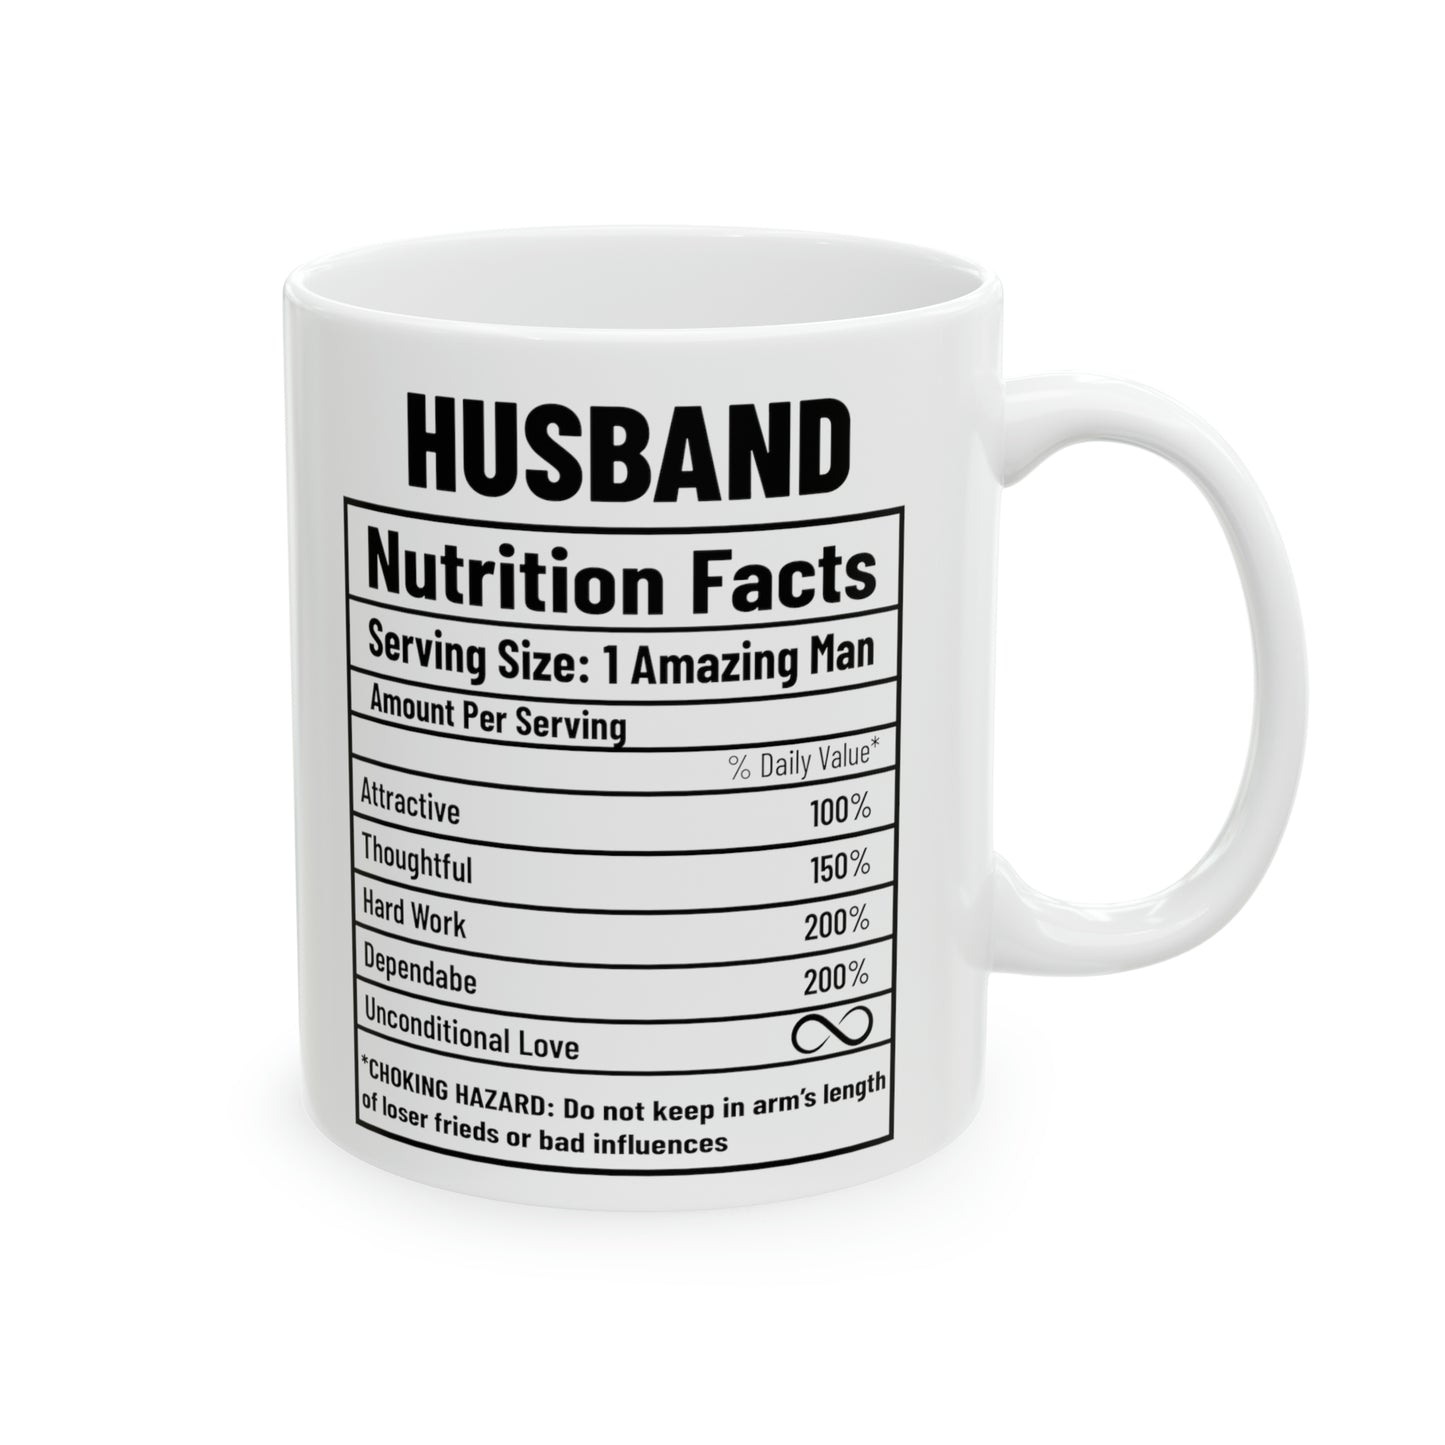 To My Husband | Nutrition Facts | Ceramic Mug, 11oz